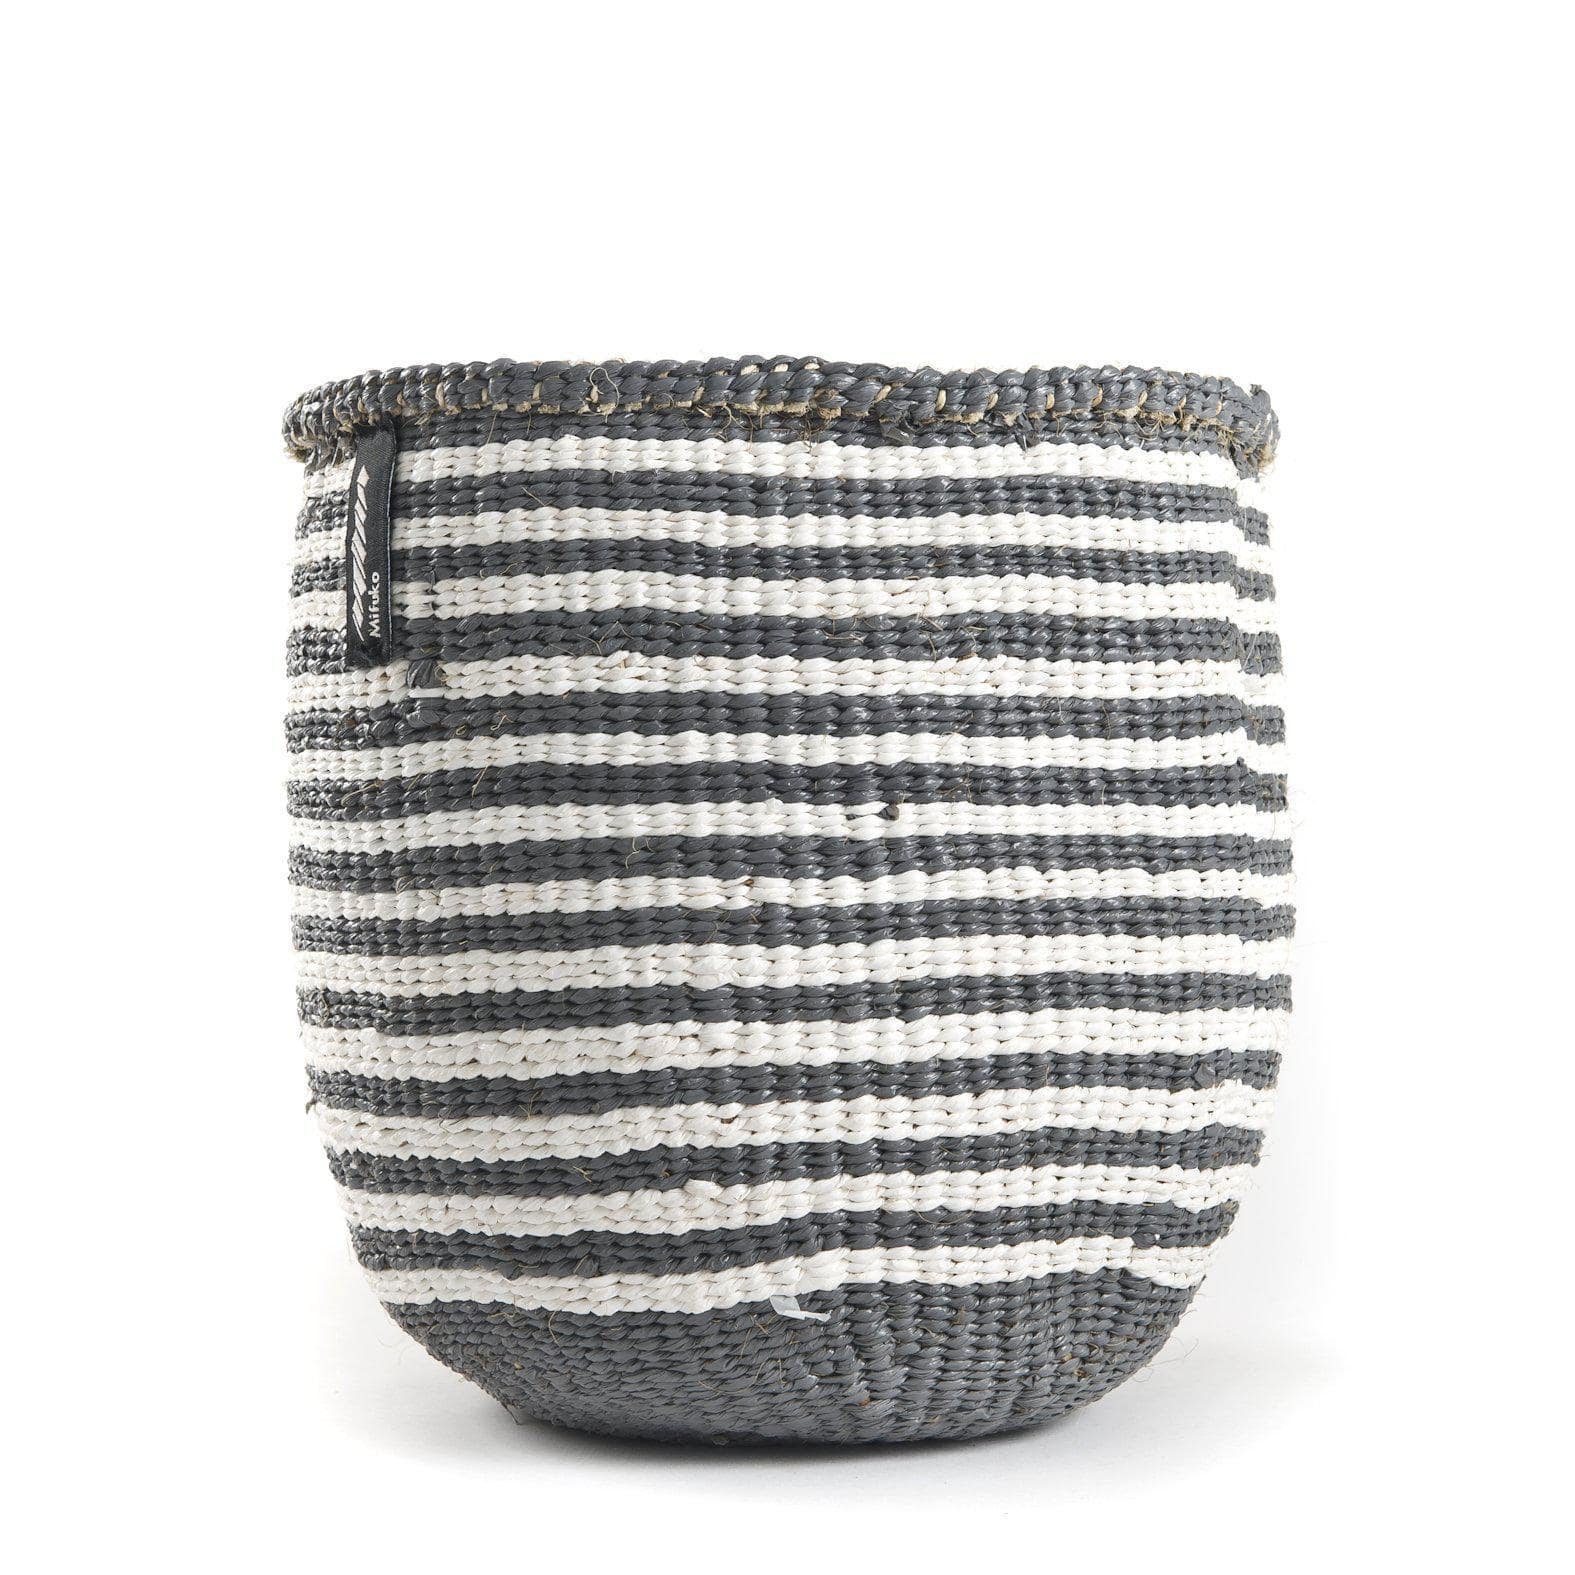 Mifuko Partly recycled plastic and sisal Small basket S Kiondo basket | Thin grey stripes S